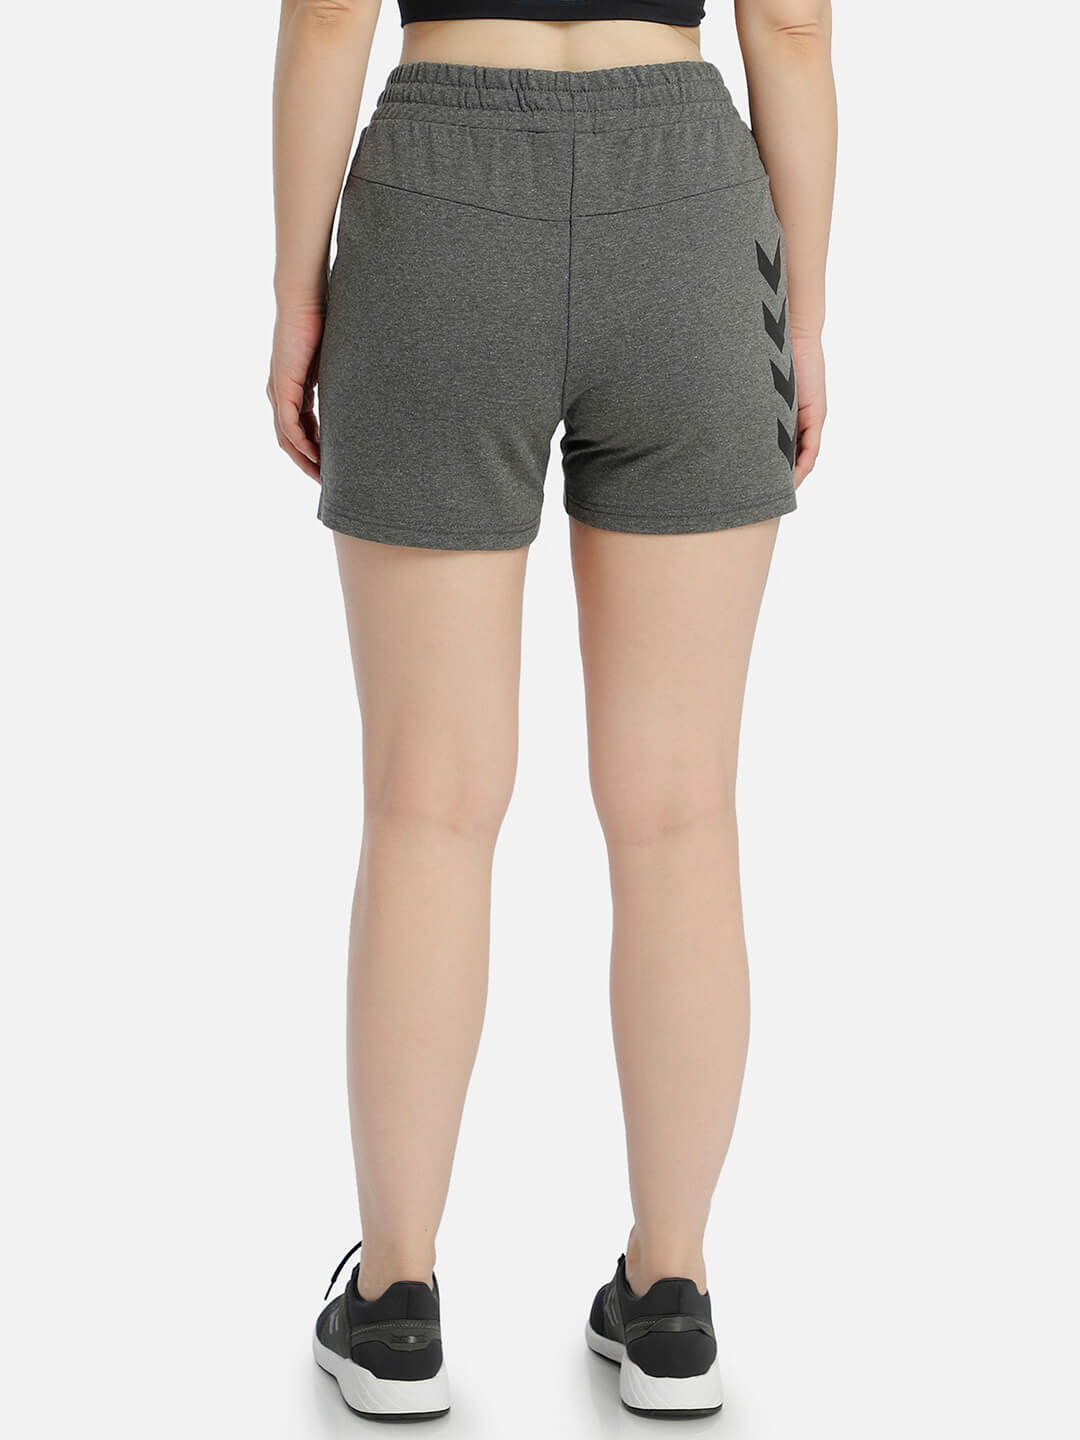 Nica Dark Grey Shorts for Women